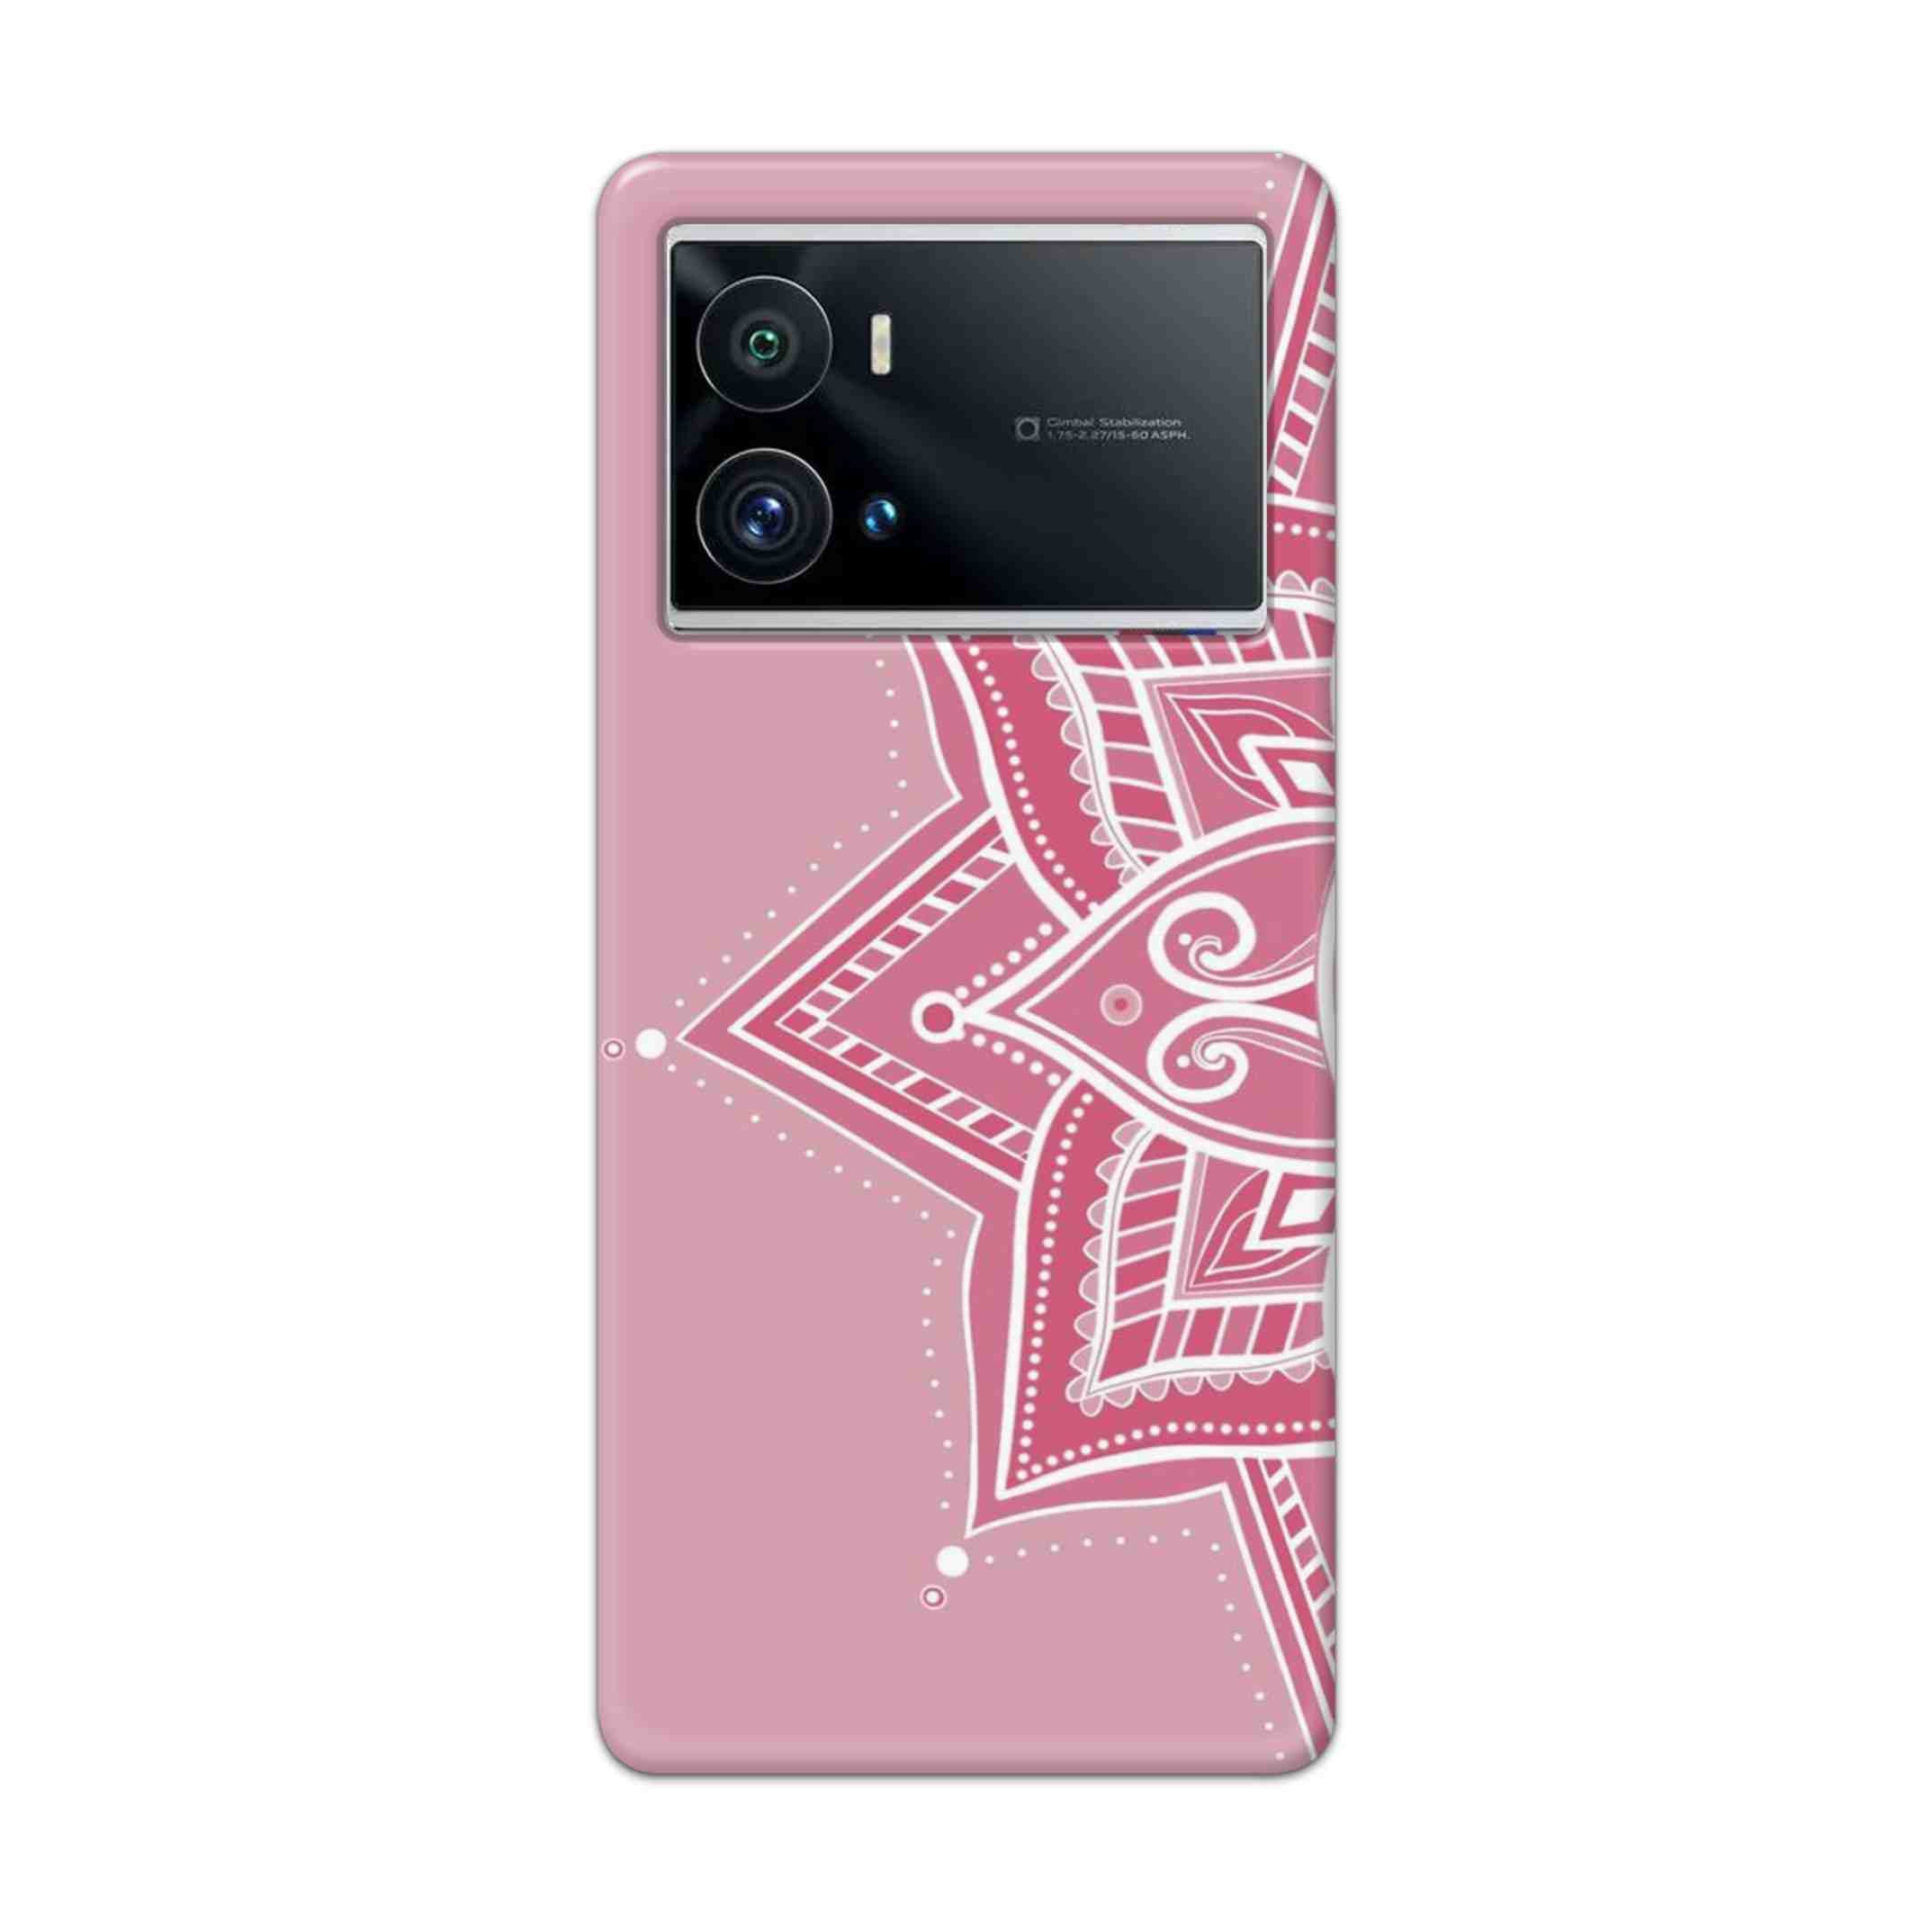 Buy Pink Rangoli Hard Back Mobile Phone Case Cover For iQOO 9 Pro 5G Online